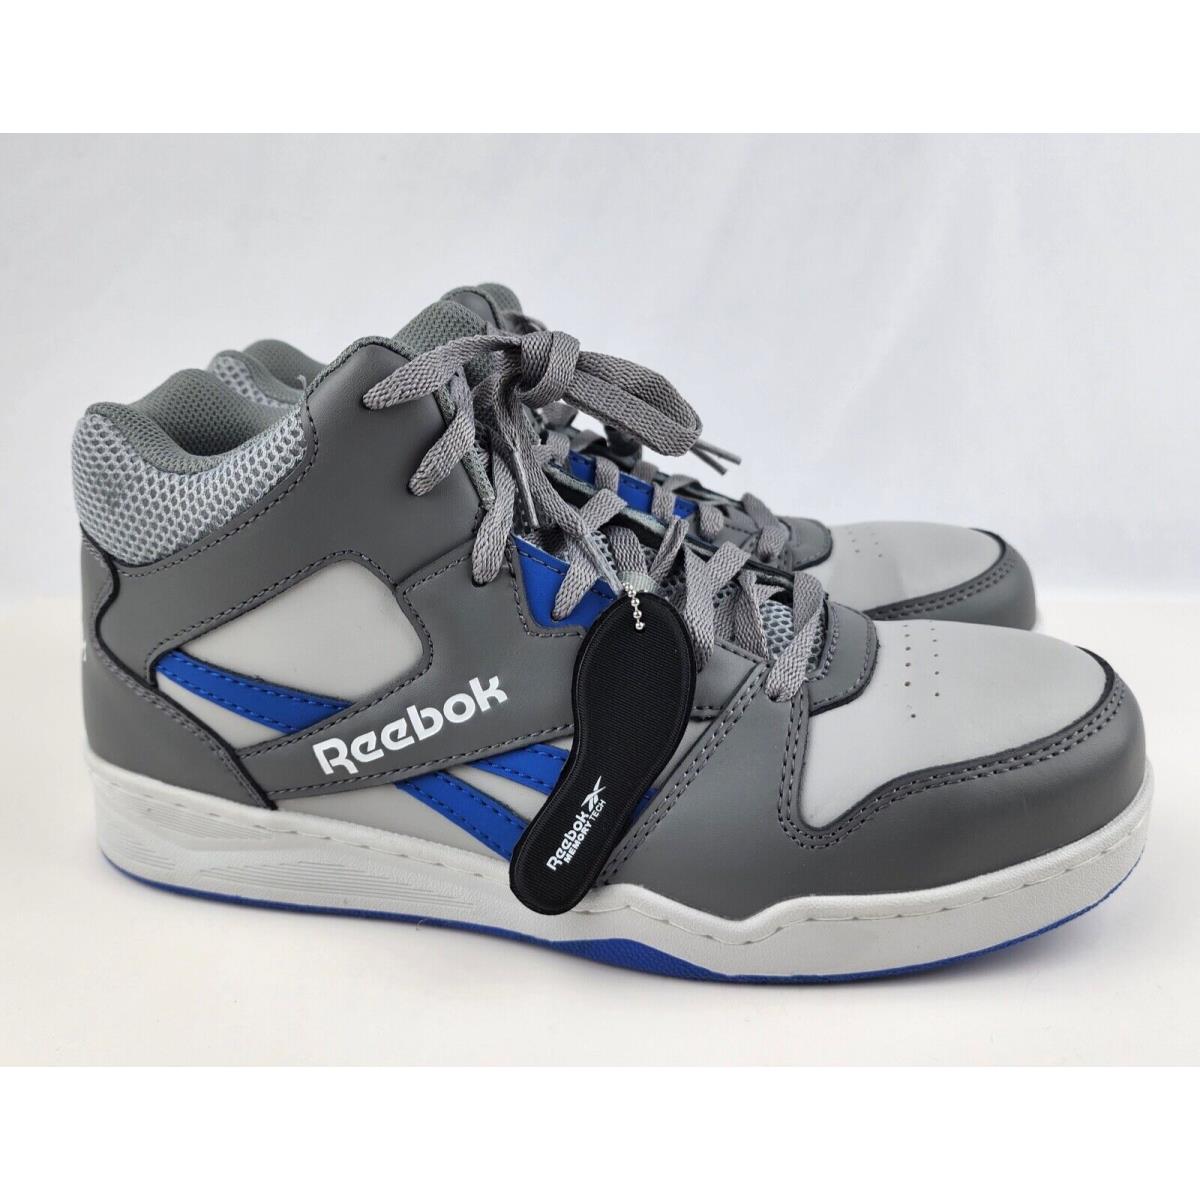 Reebok Composite Toe Classic High-top Work Sneaker Grey/blue 9.5 W Work Shoe